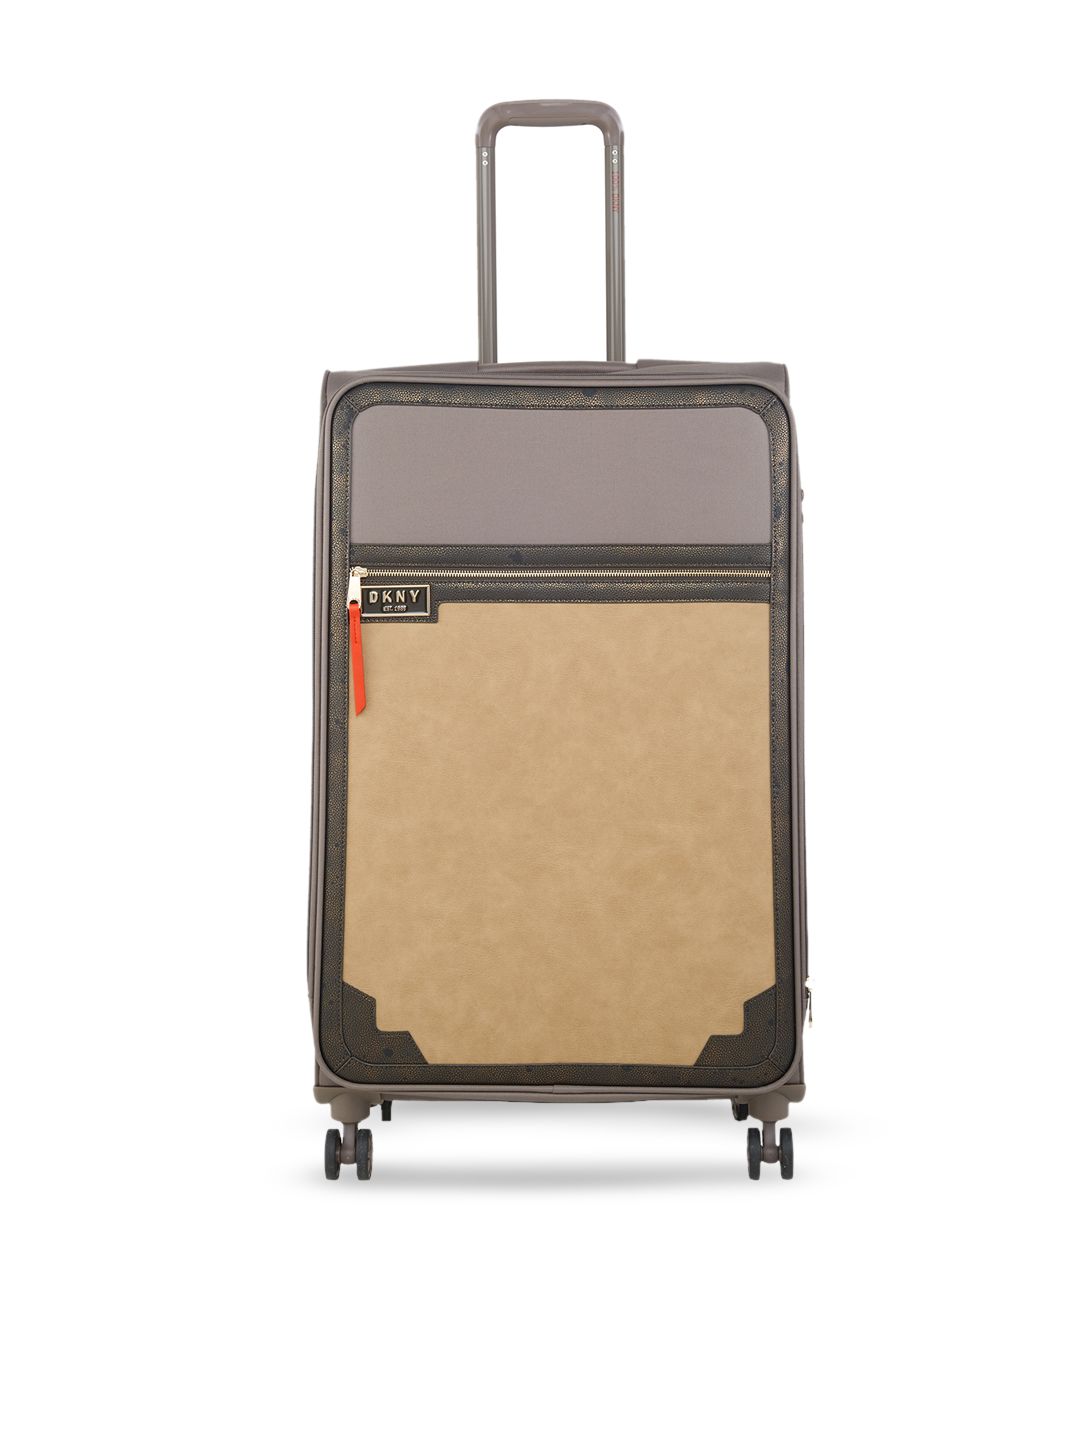 DKNY Adorn Range Bronze Soft Large Suitcase Price in India